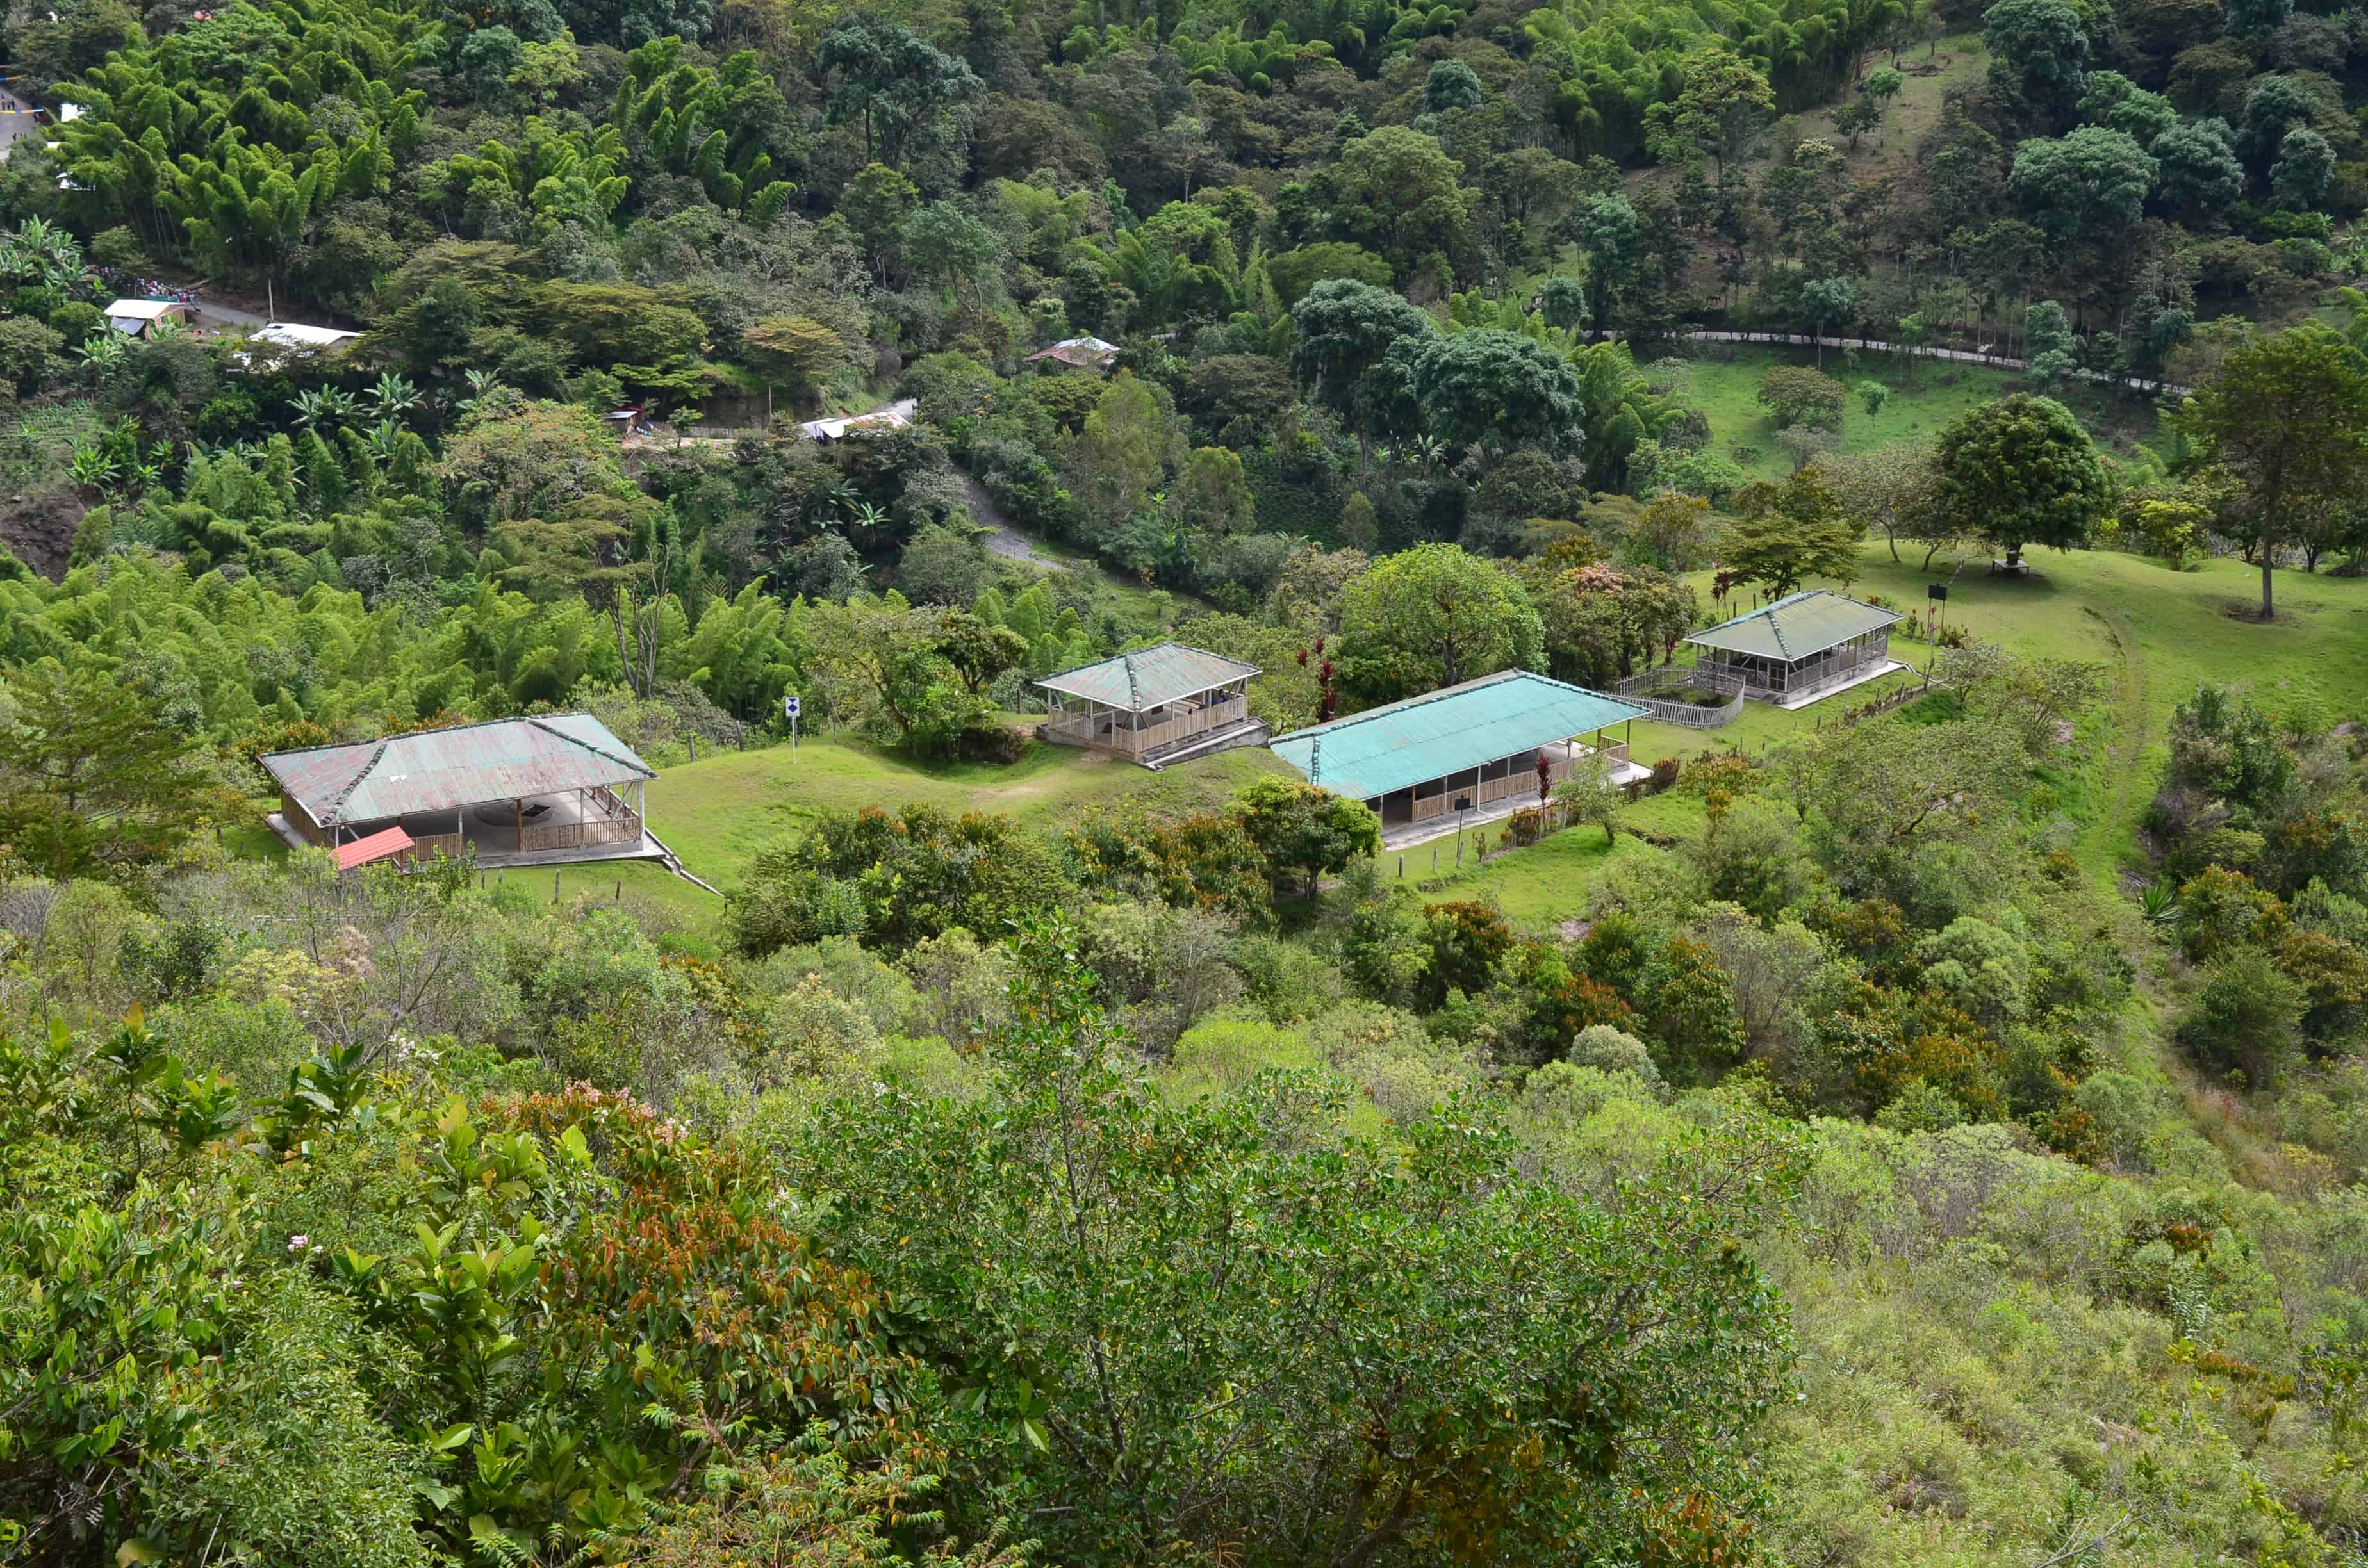 Alto de San Andrés from the trail at Tierradentro, Cauca, Colombia